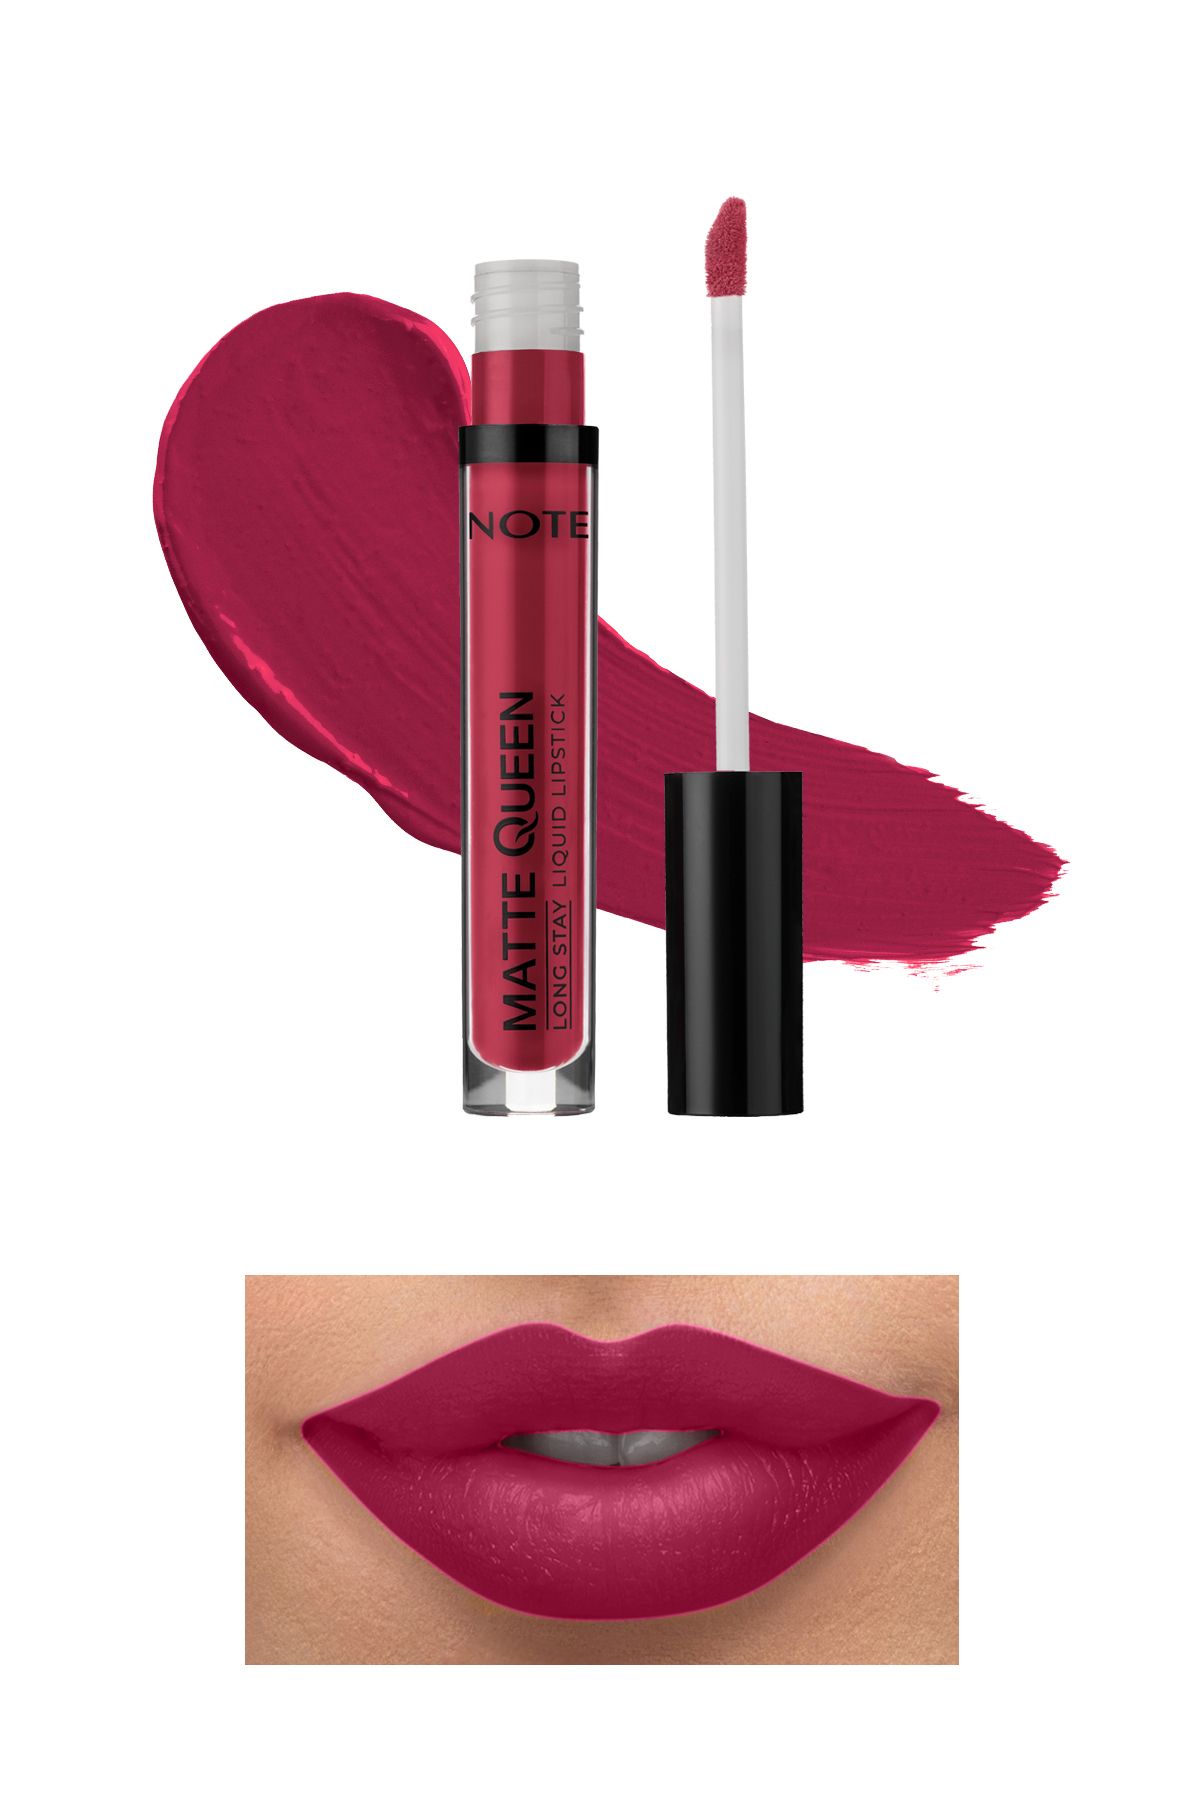 Note Cosmetics Matte Queen Lipstick Kalıcı Likit Ruj 14 Bold Berry - Kırmızı